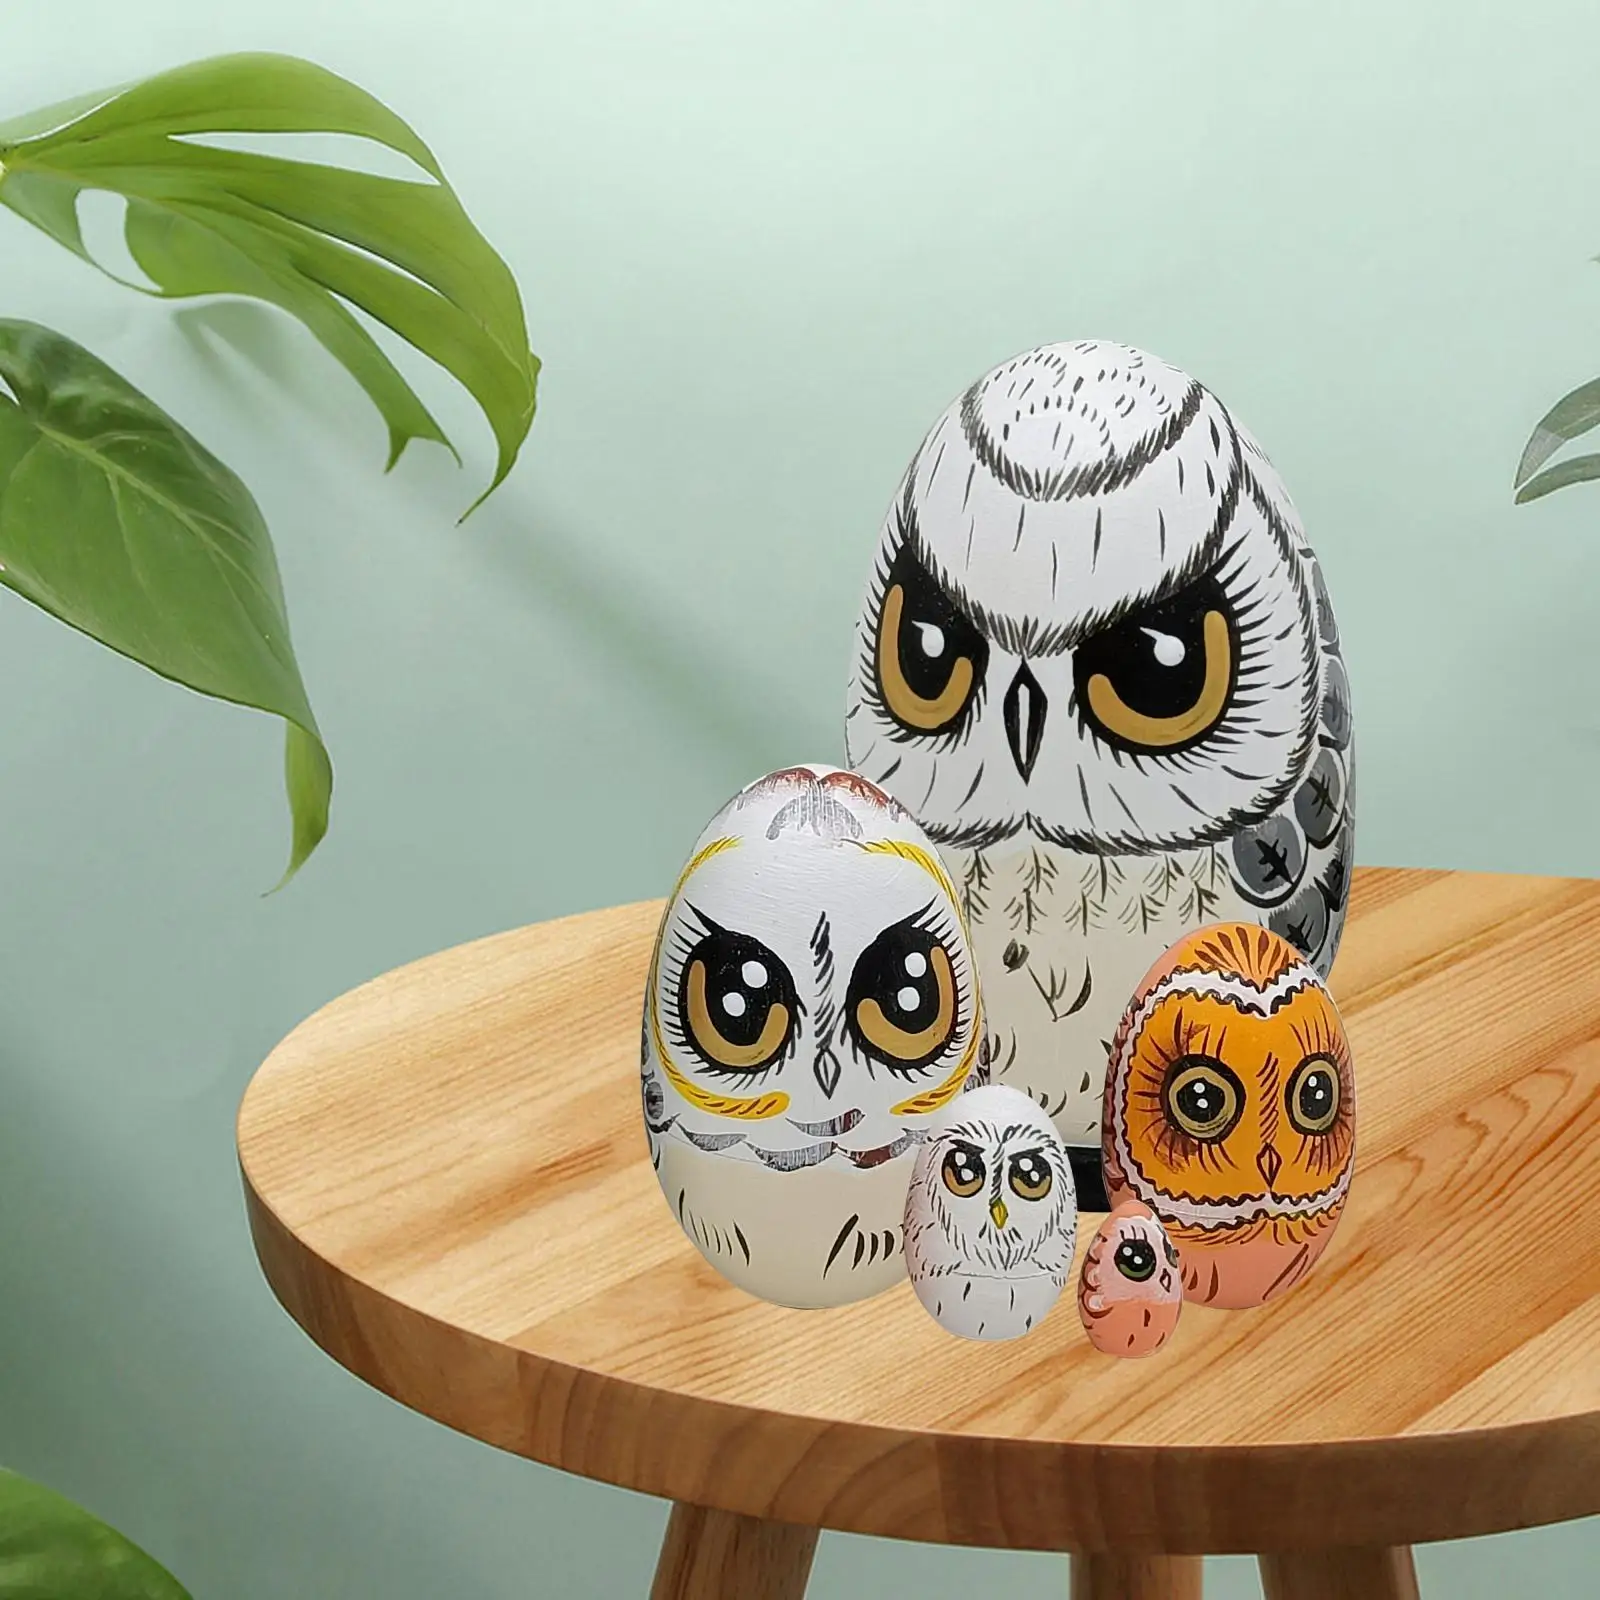 5x Owl Russian Nesting Dolls Ornaments Matryoshka for Tabletop Halloween